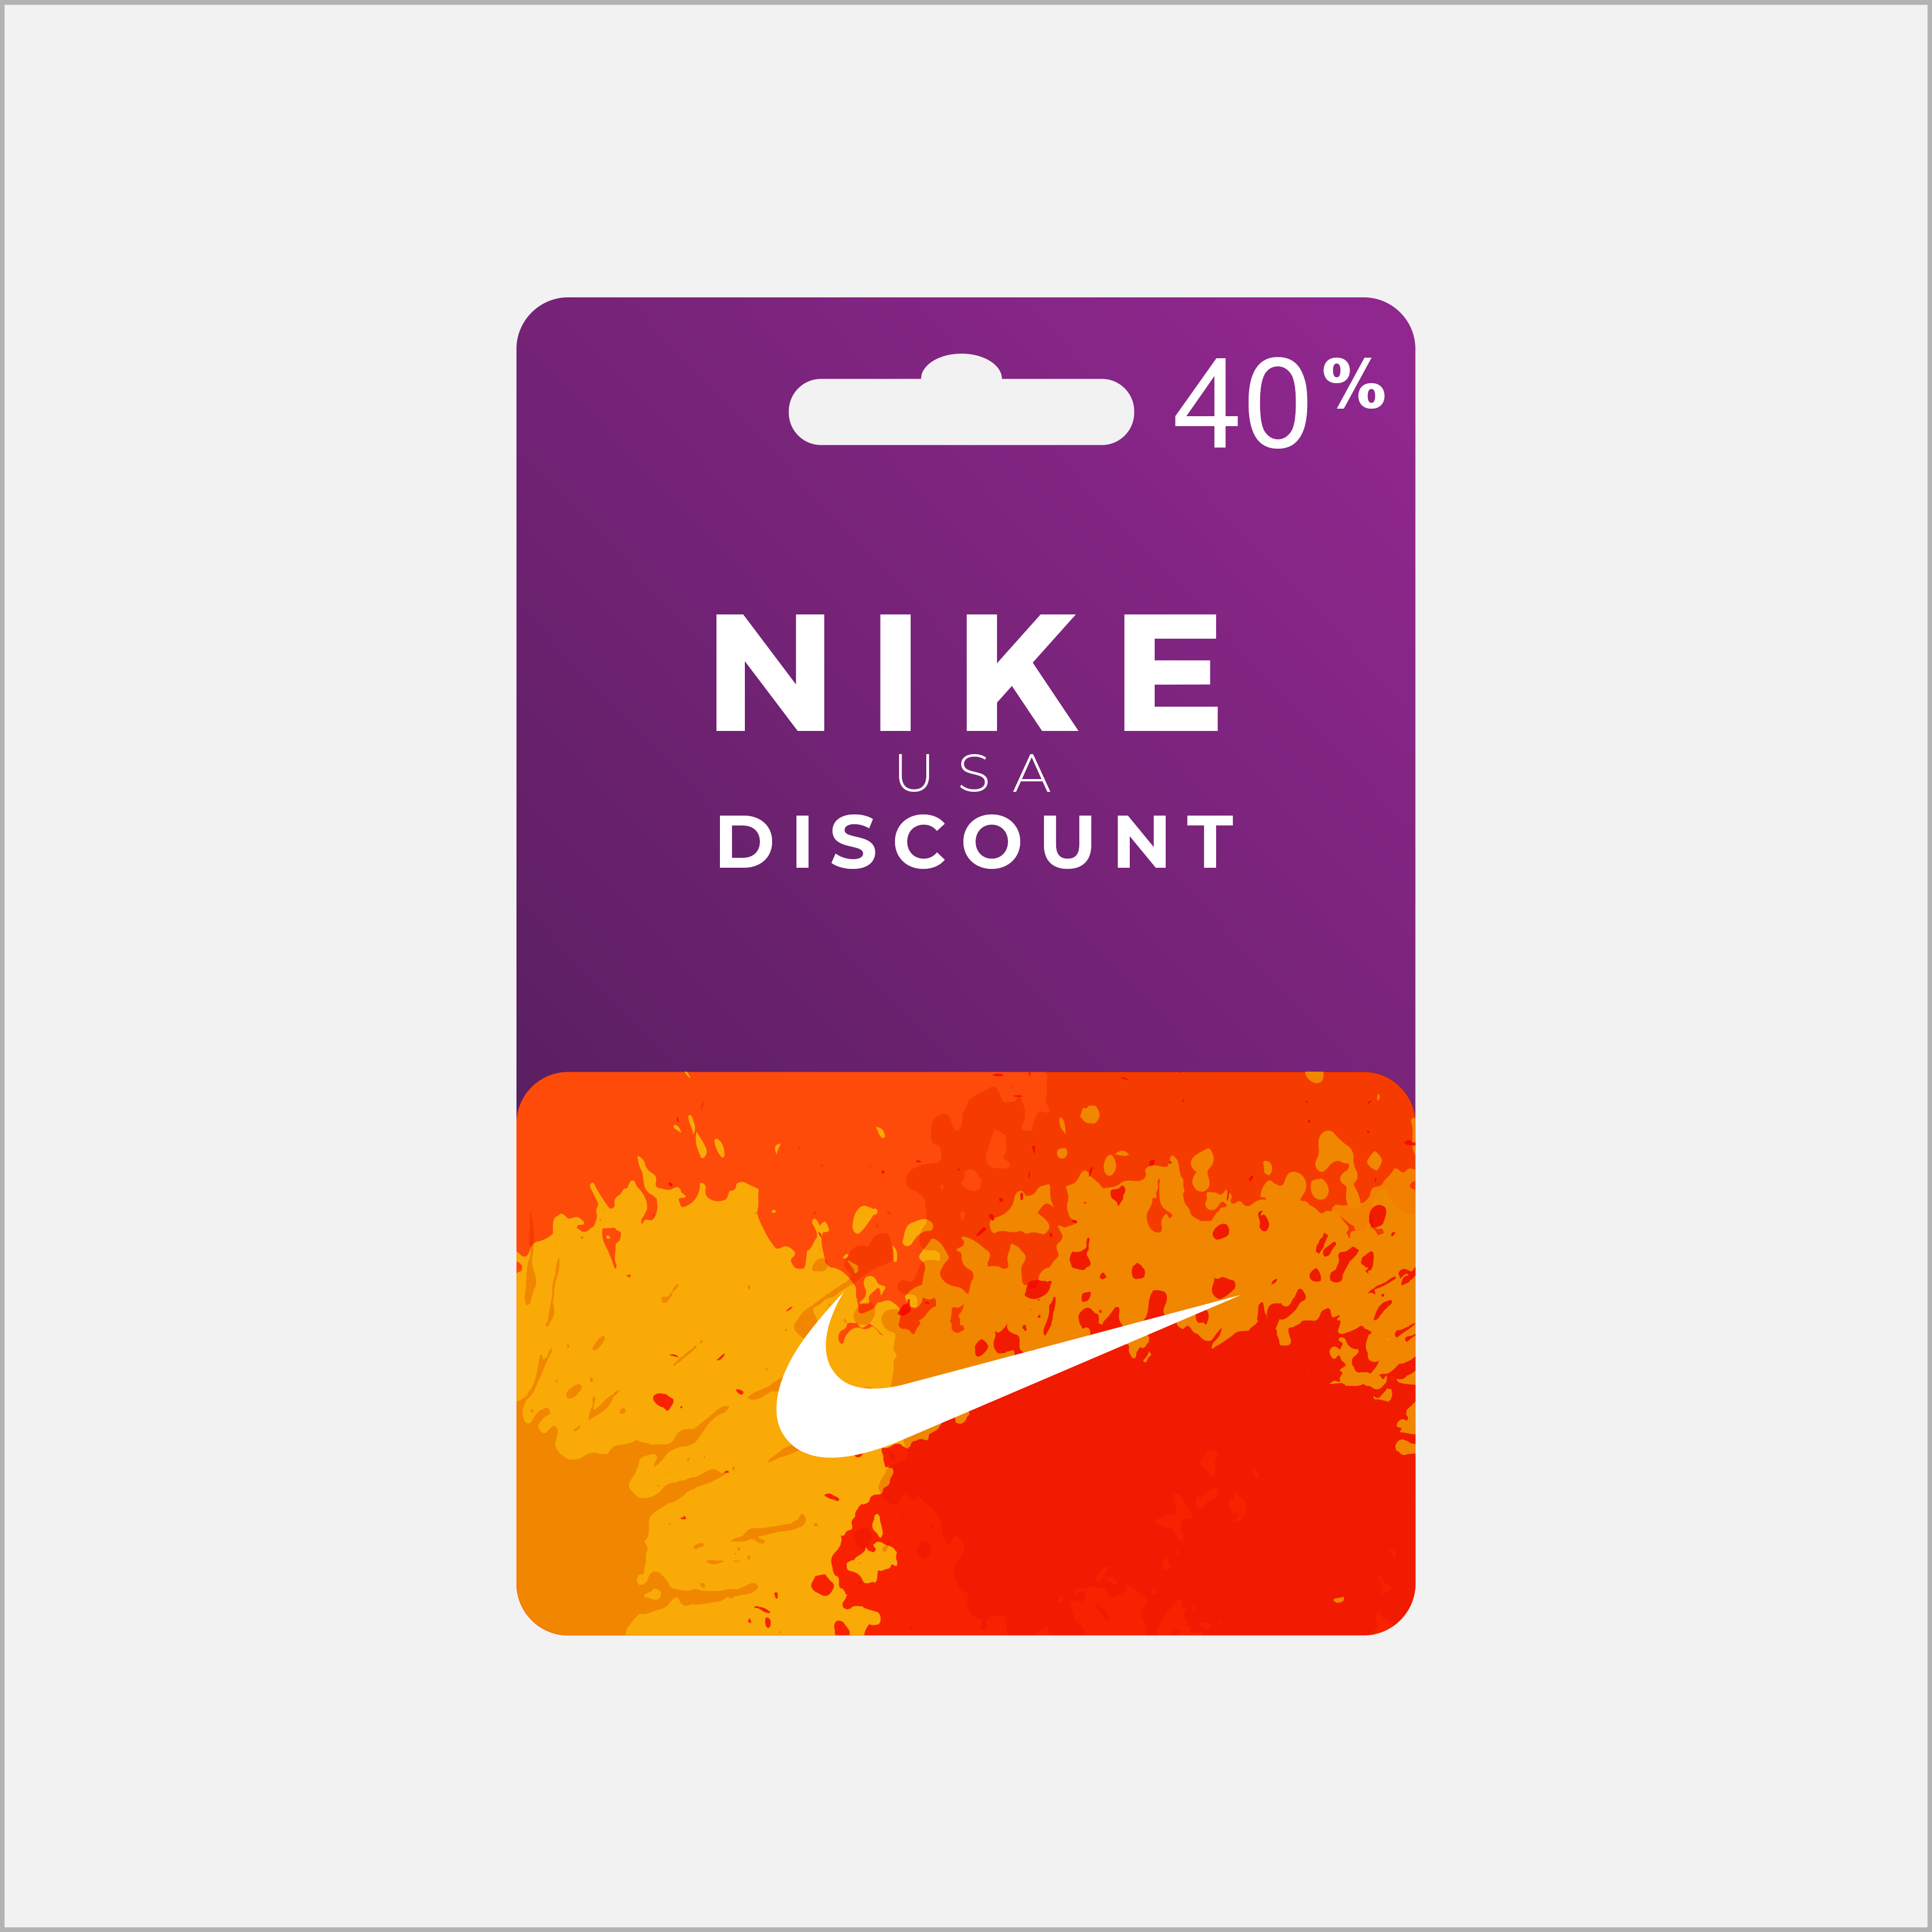 Nike Discount Code 40% for Nike USA 